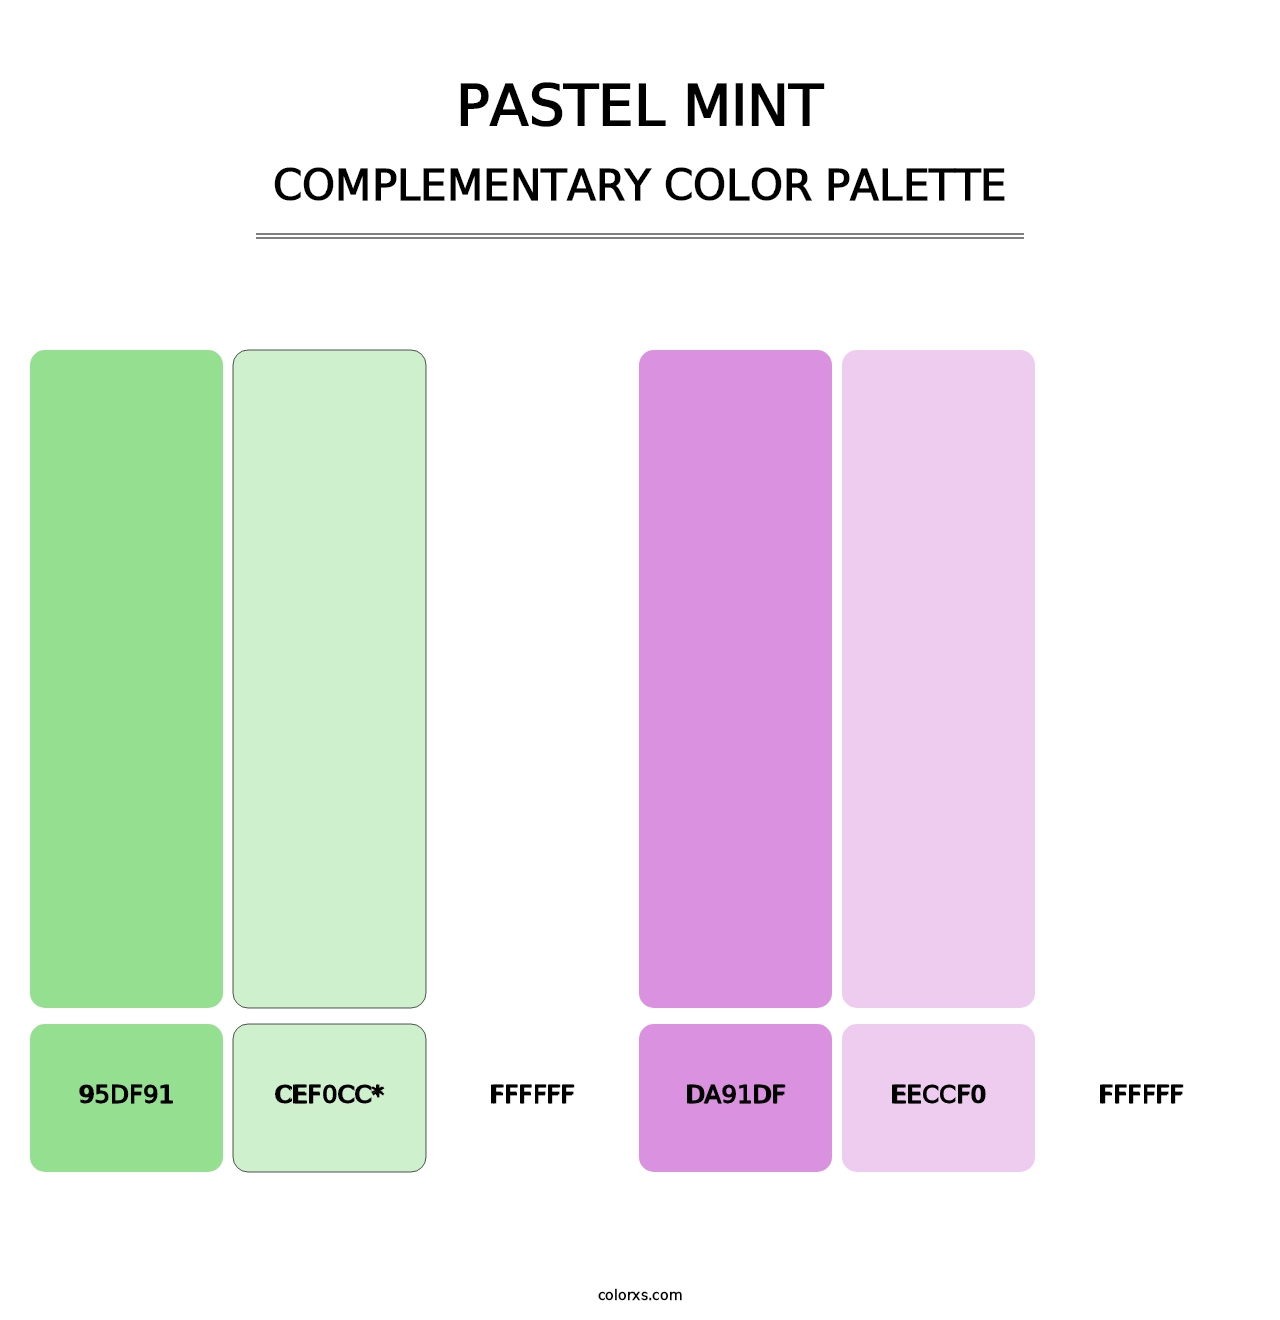 Pastel Mint - Complementary Color Palette